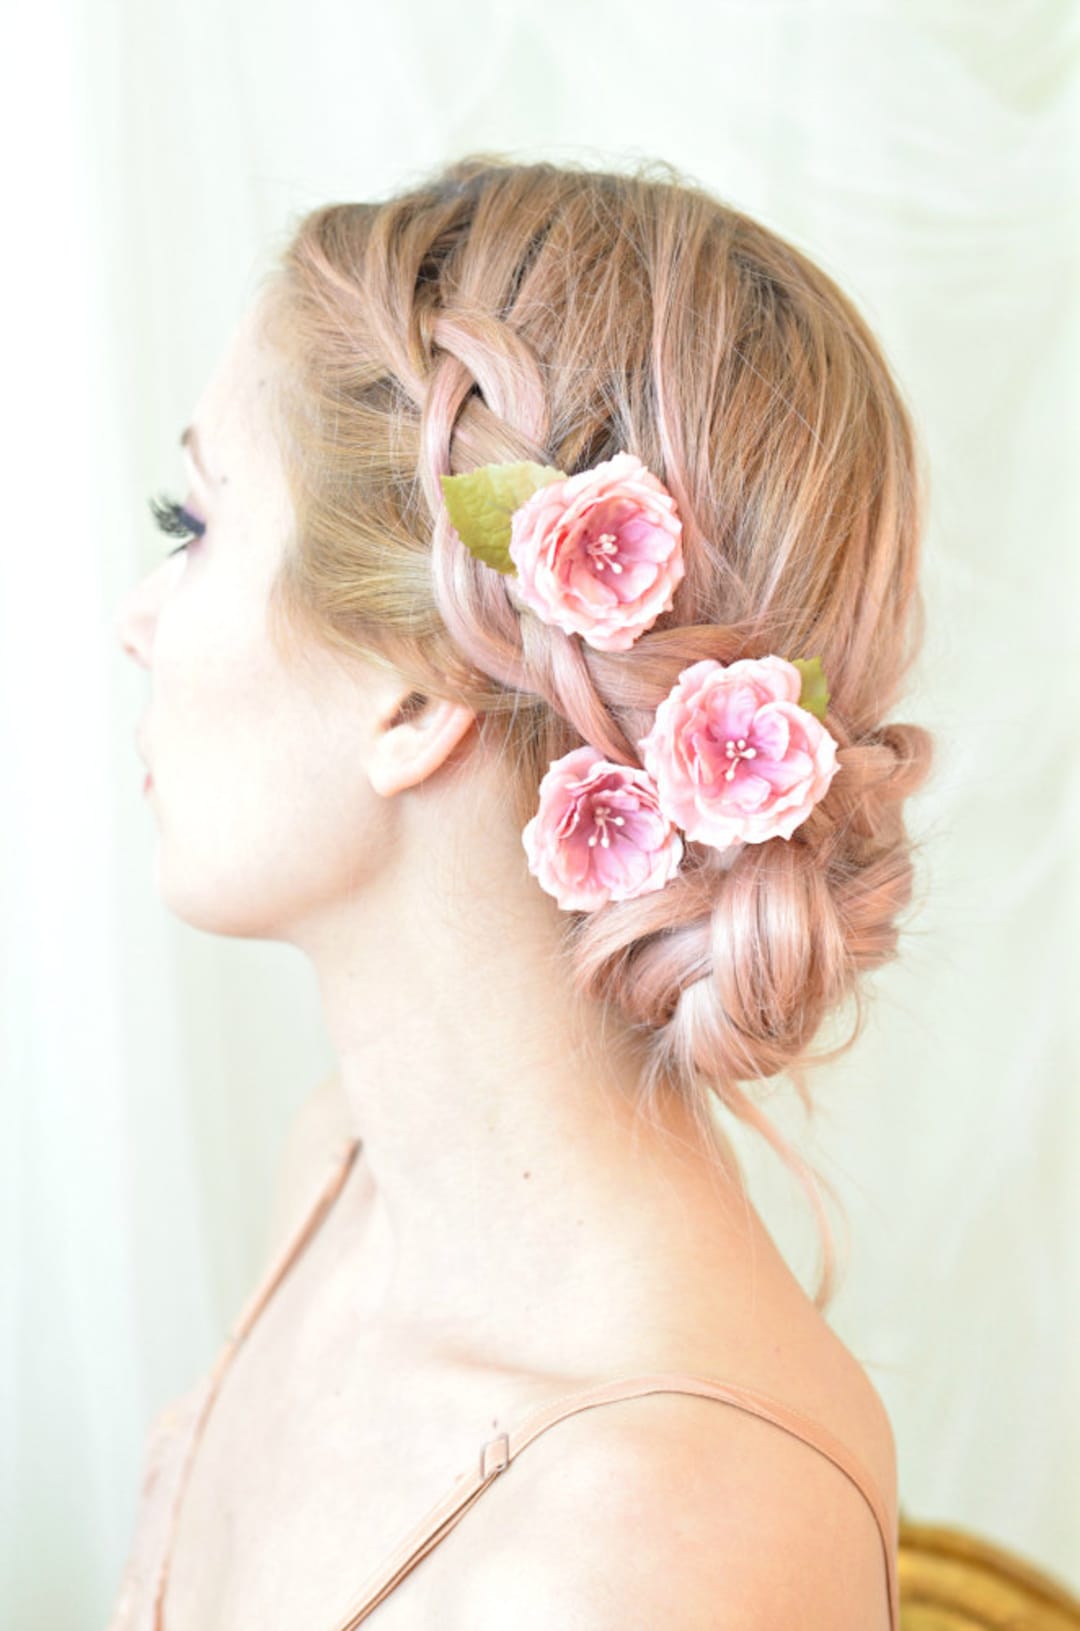 Rose Flower U-shaped Hair Pins Wedding Hair Accessories -  Canada   Flower hair accessories wedding, Bridesmaid hair accessories, Flower hair  accessories